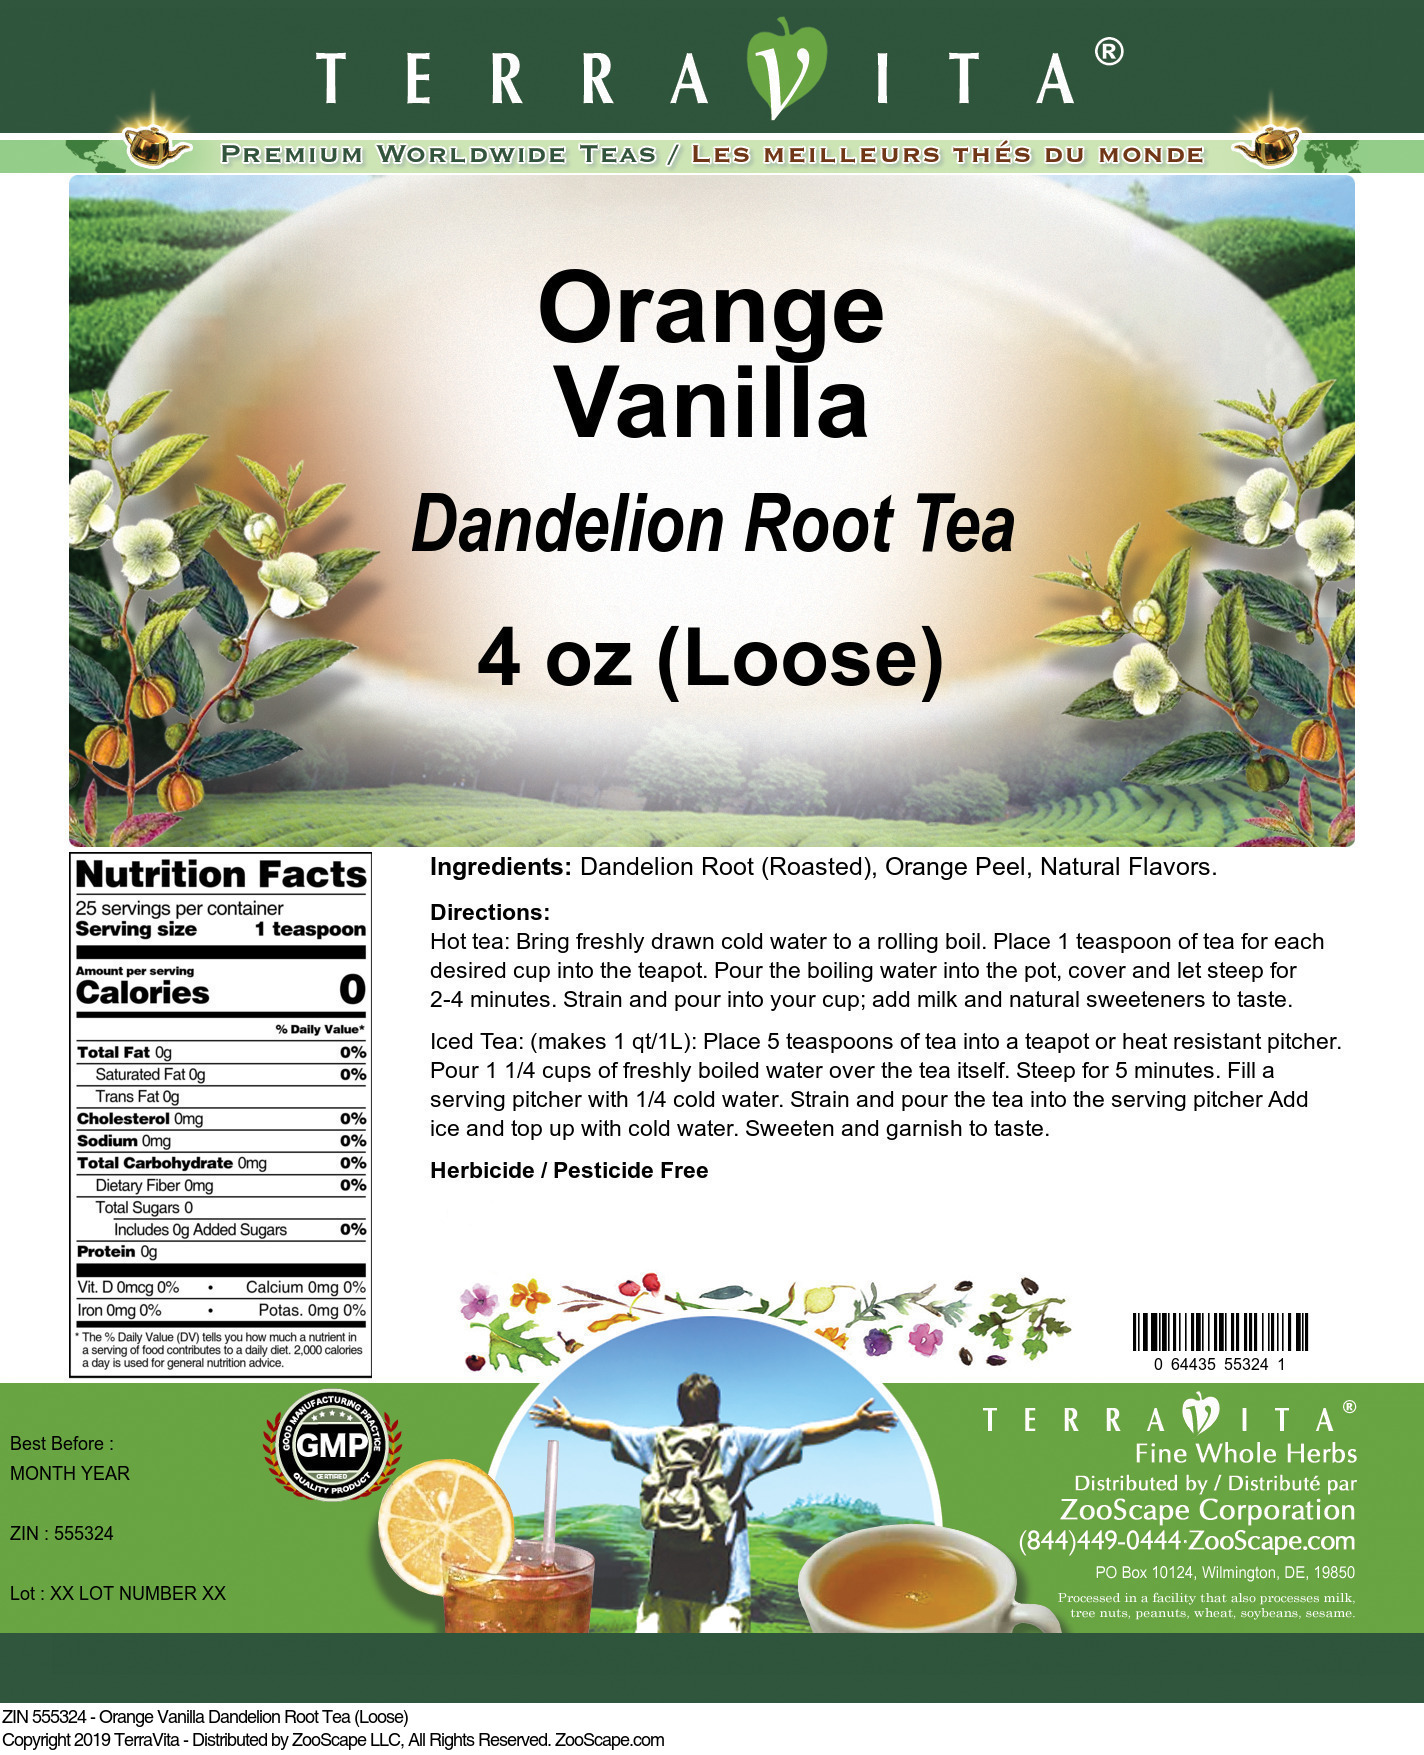 Orange Vanilla Dandelion Root Tea (Loose) - Label